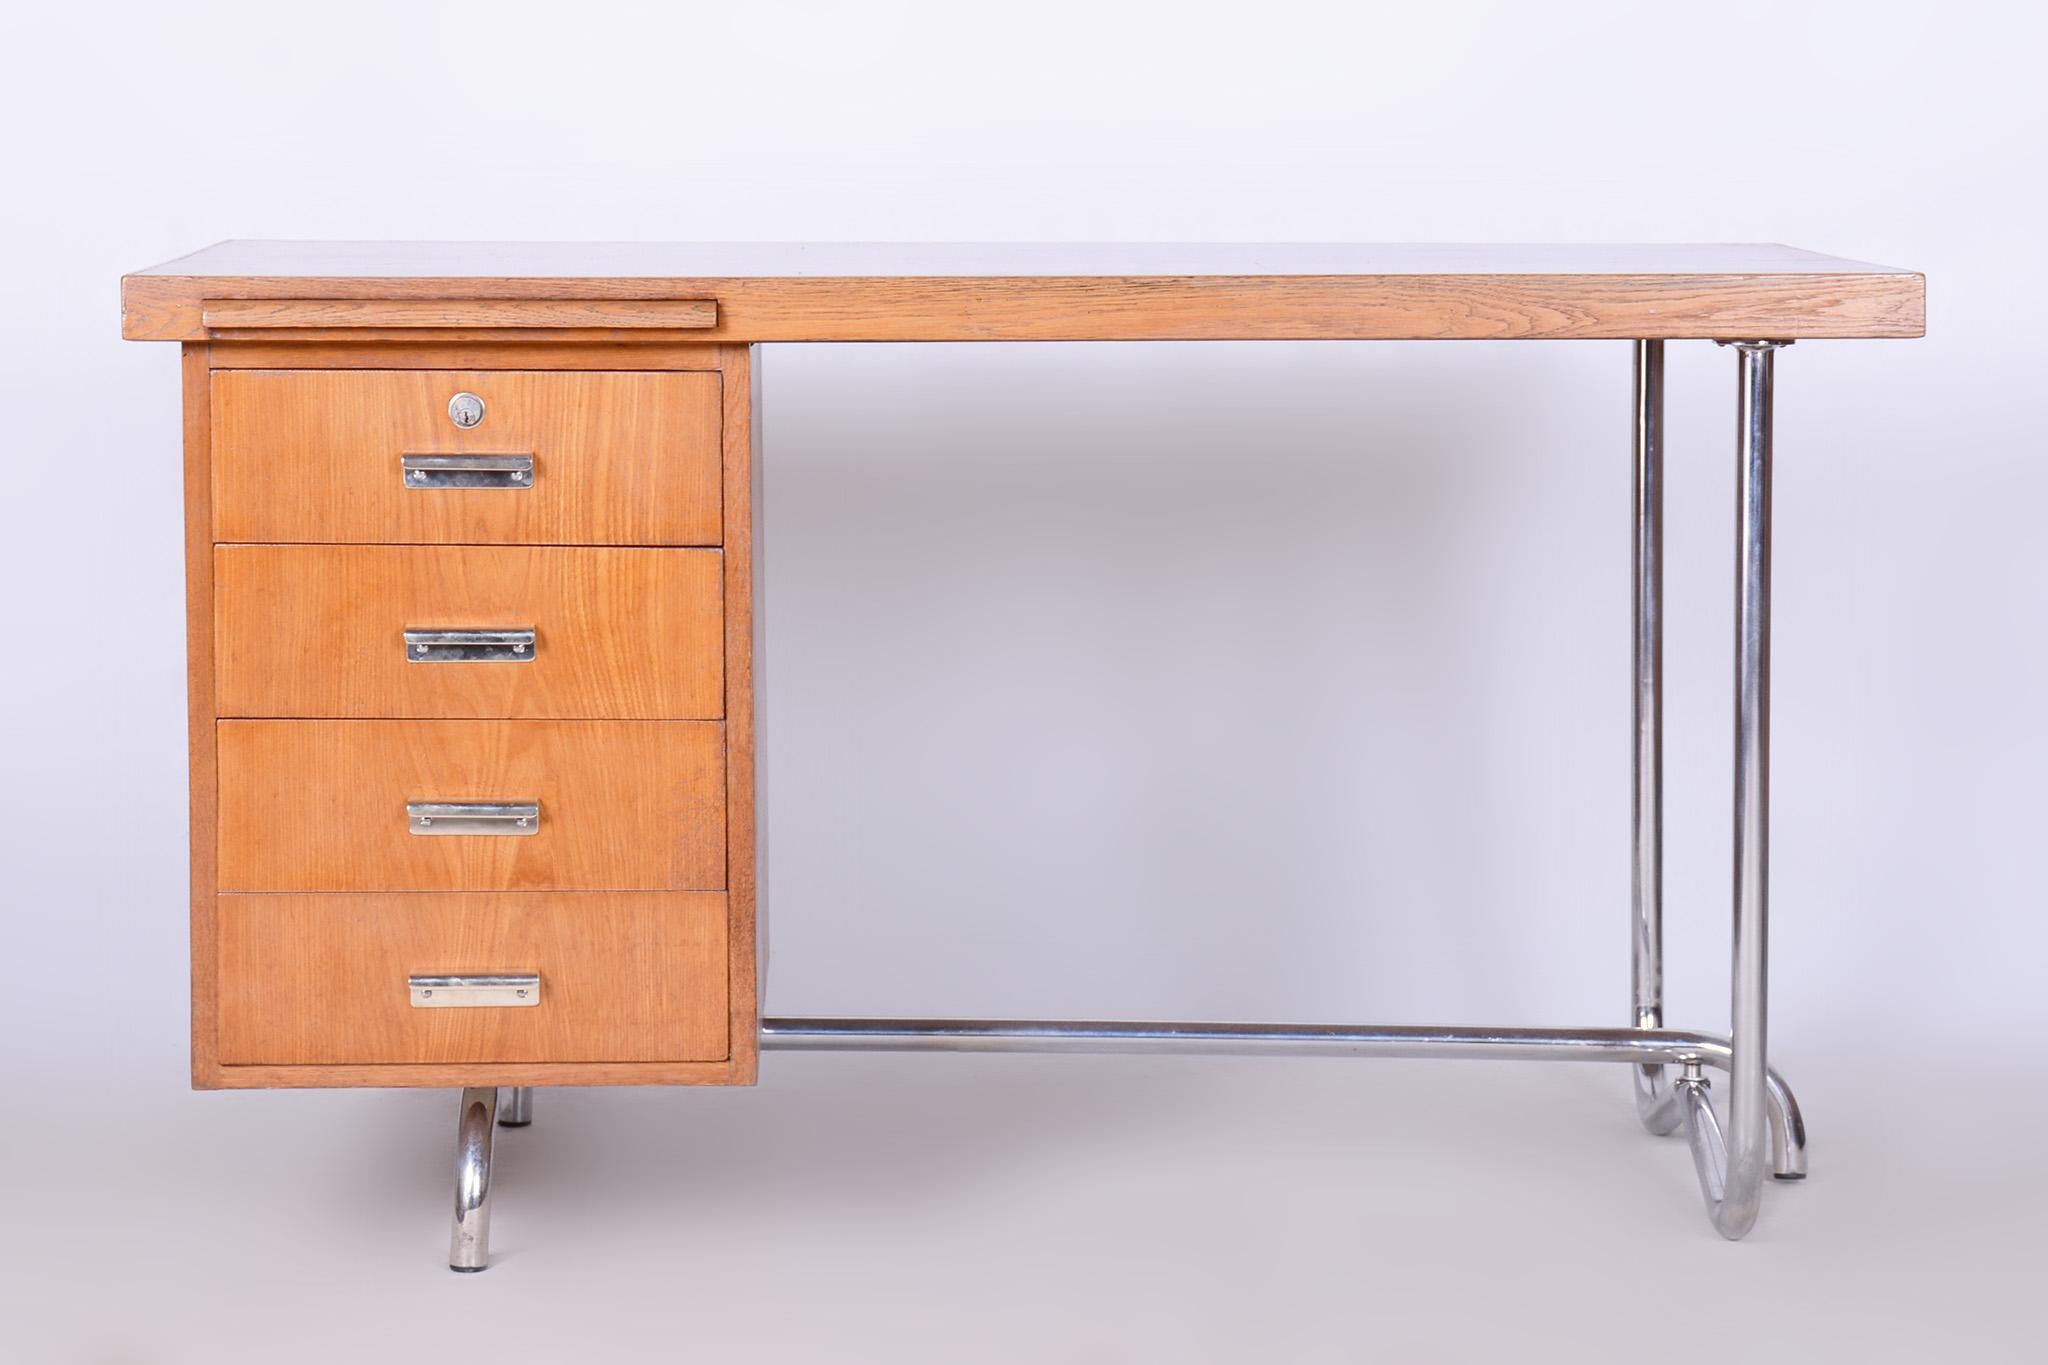 Restored Pair of Oak Writing Desks, Hynek Gottwald, Chrome, Czechia, 1930s For Sale 4